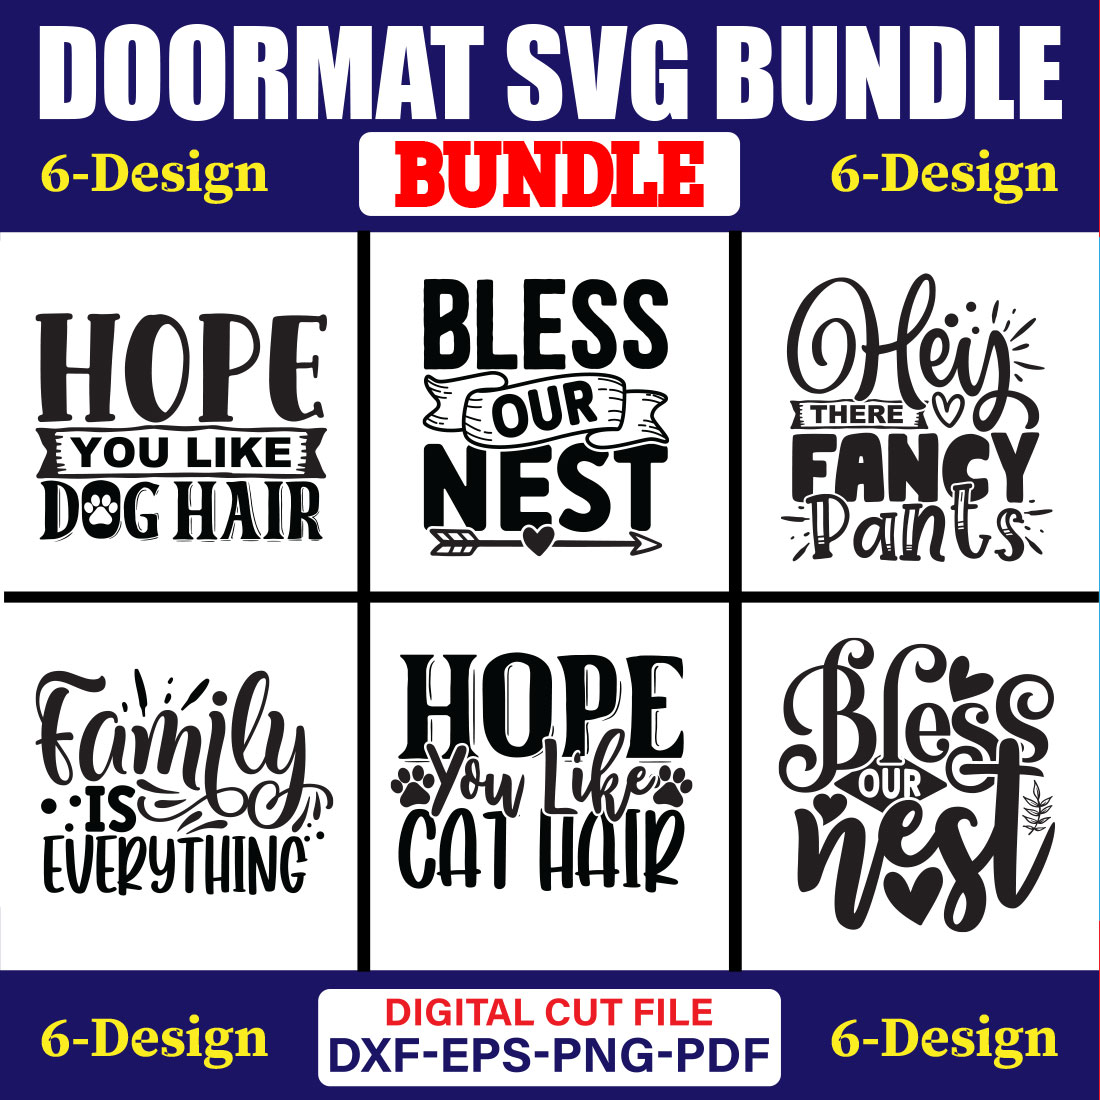 Doormat SVG T-shirt Design Bundle Vol-01 cover image.